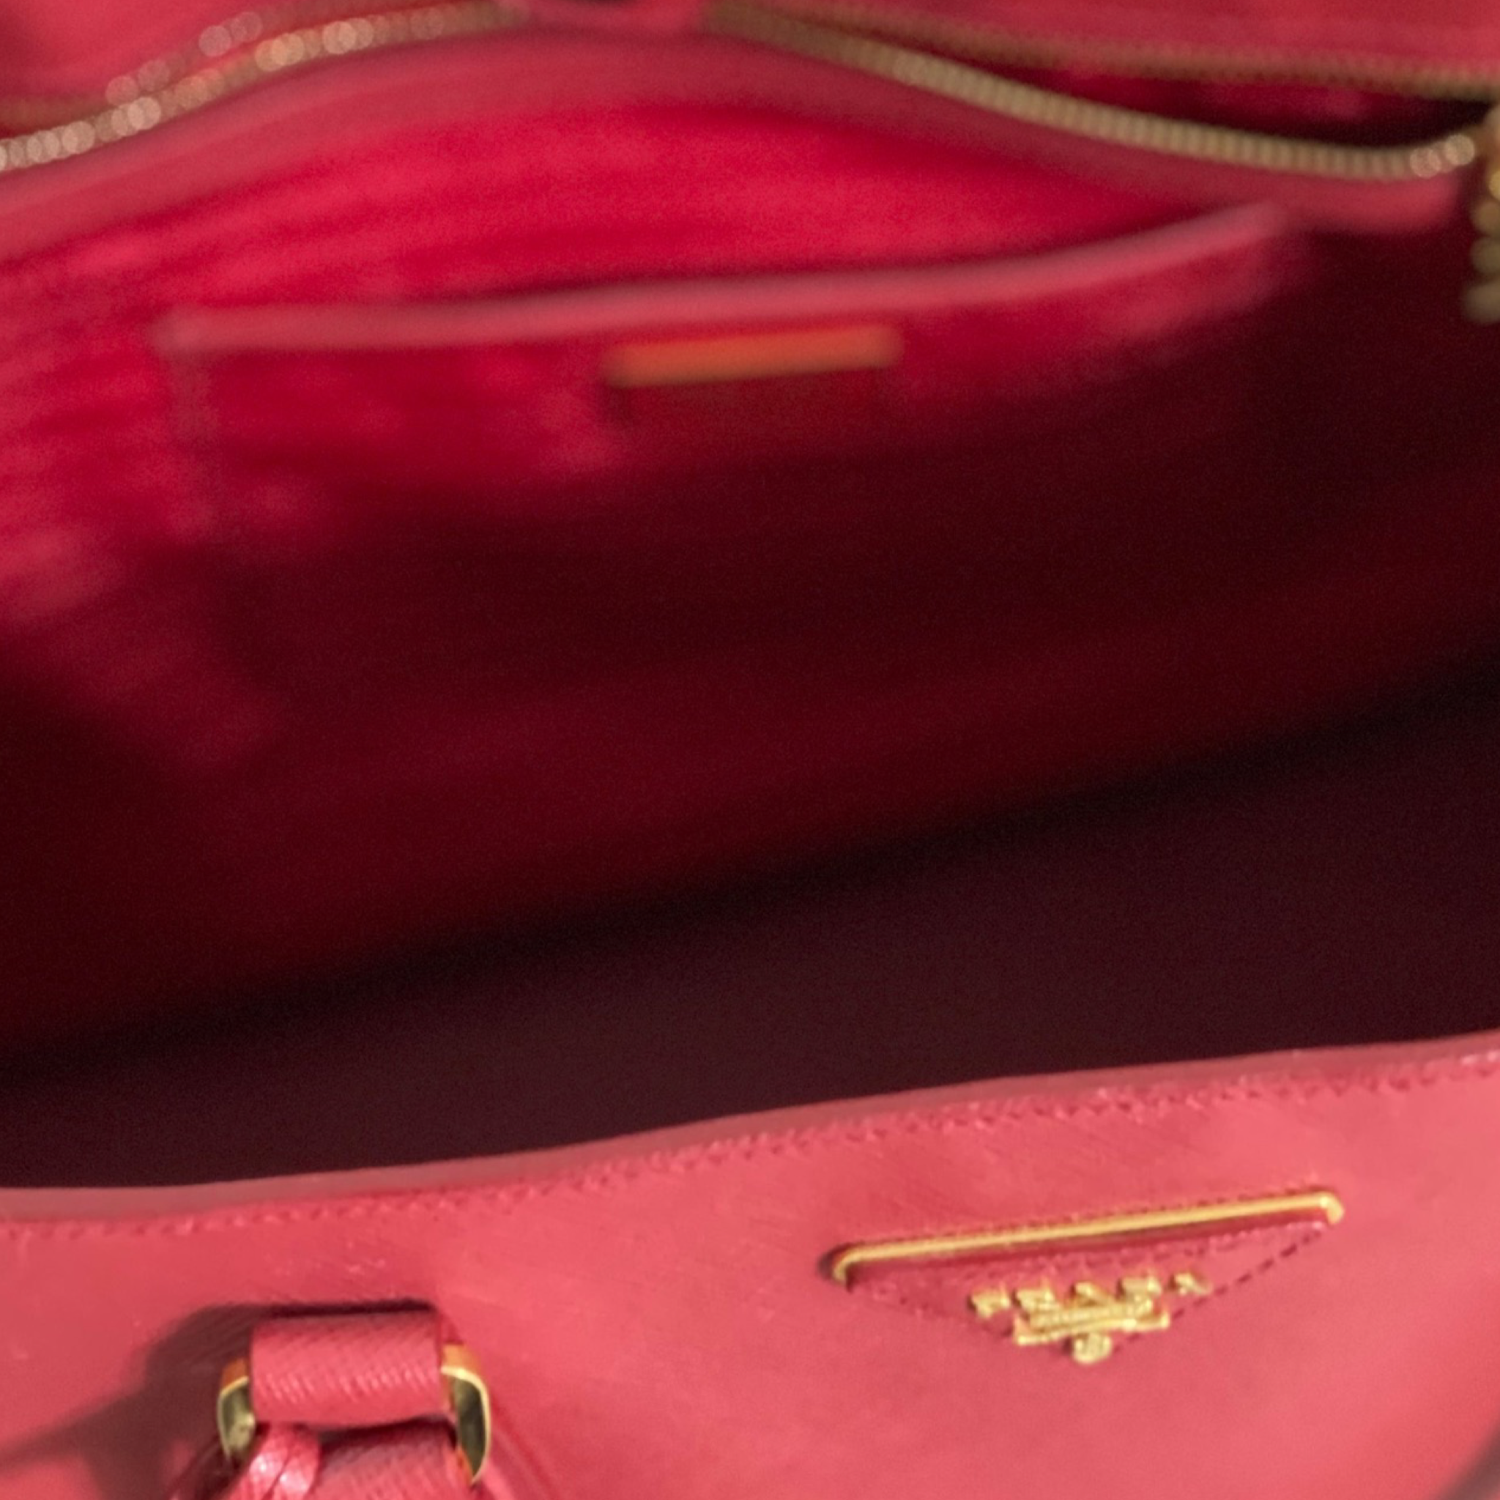 Prada Red Leather Handbag (Pre-Owned)